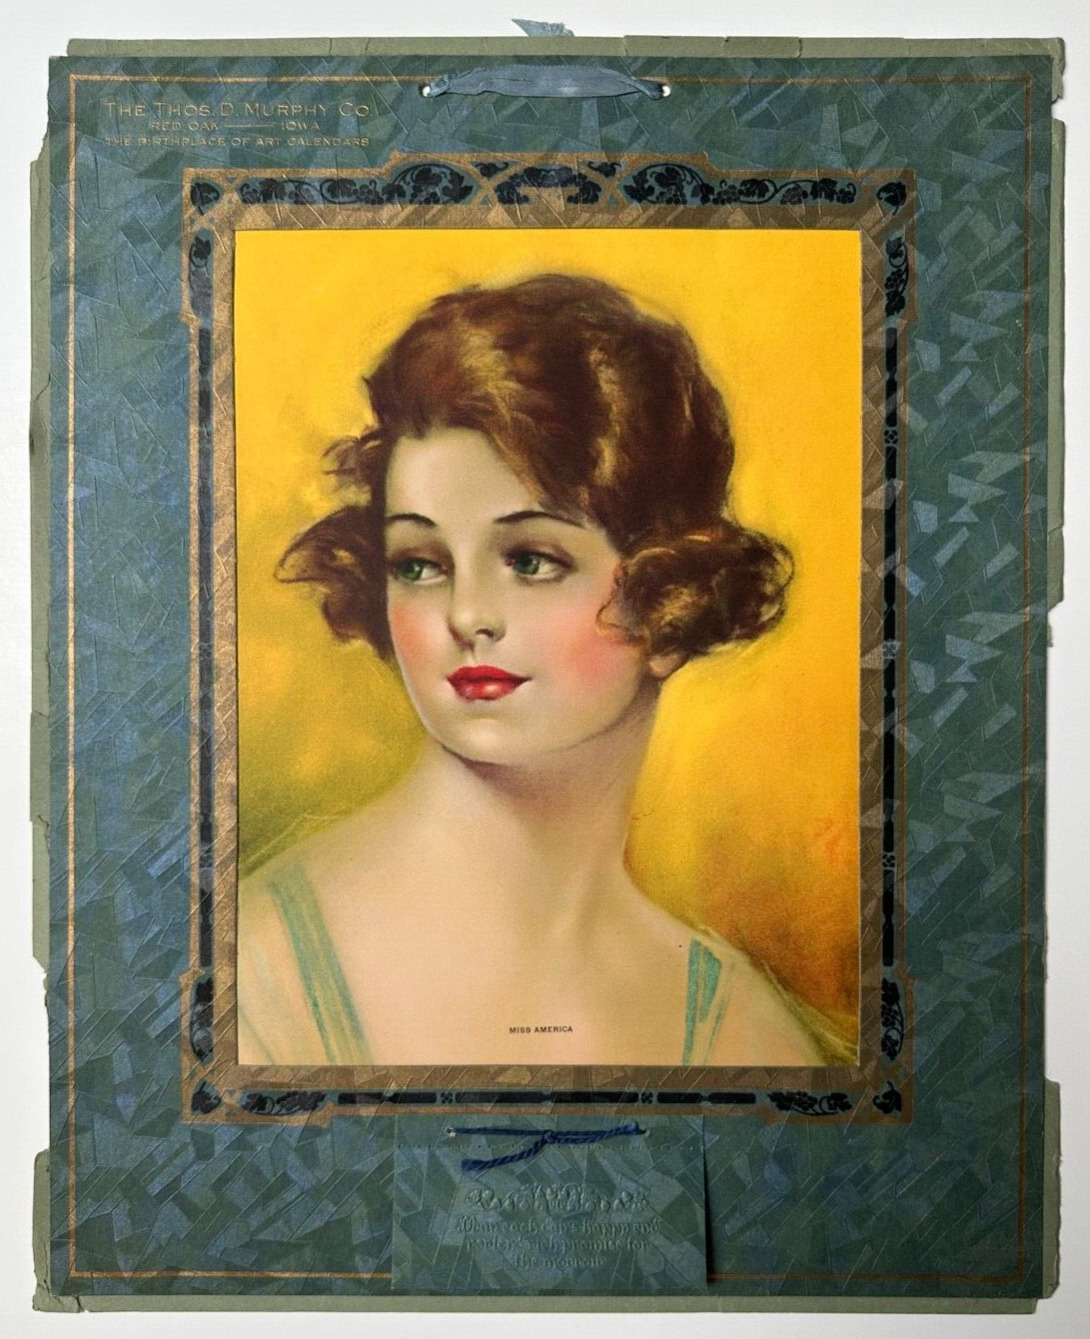 Miss America, Vintage Thos D Murphy Co Calendar Salesman Sample Pin Up Portrait